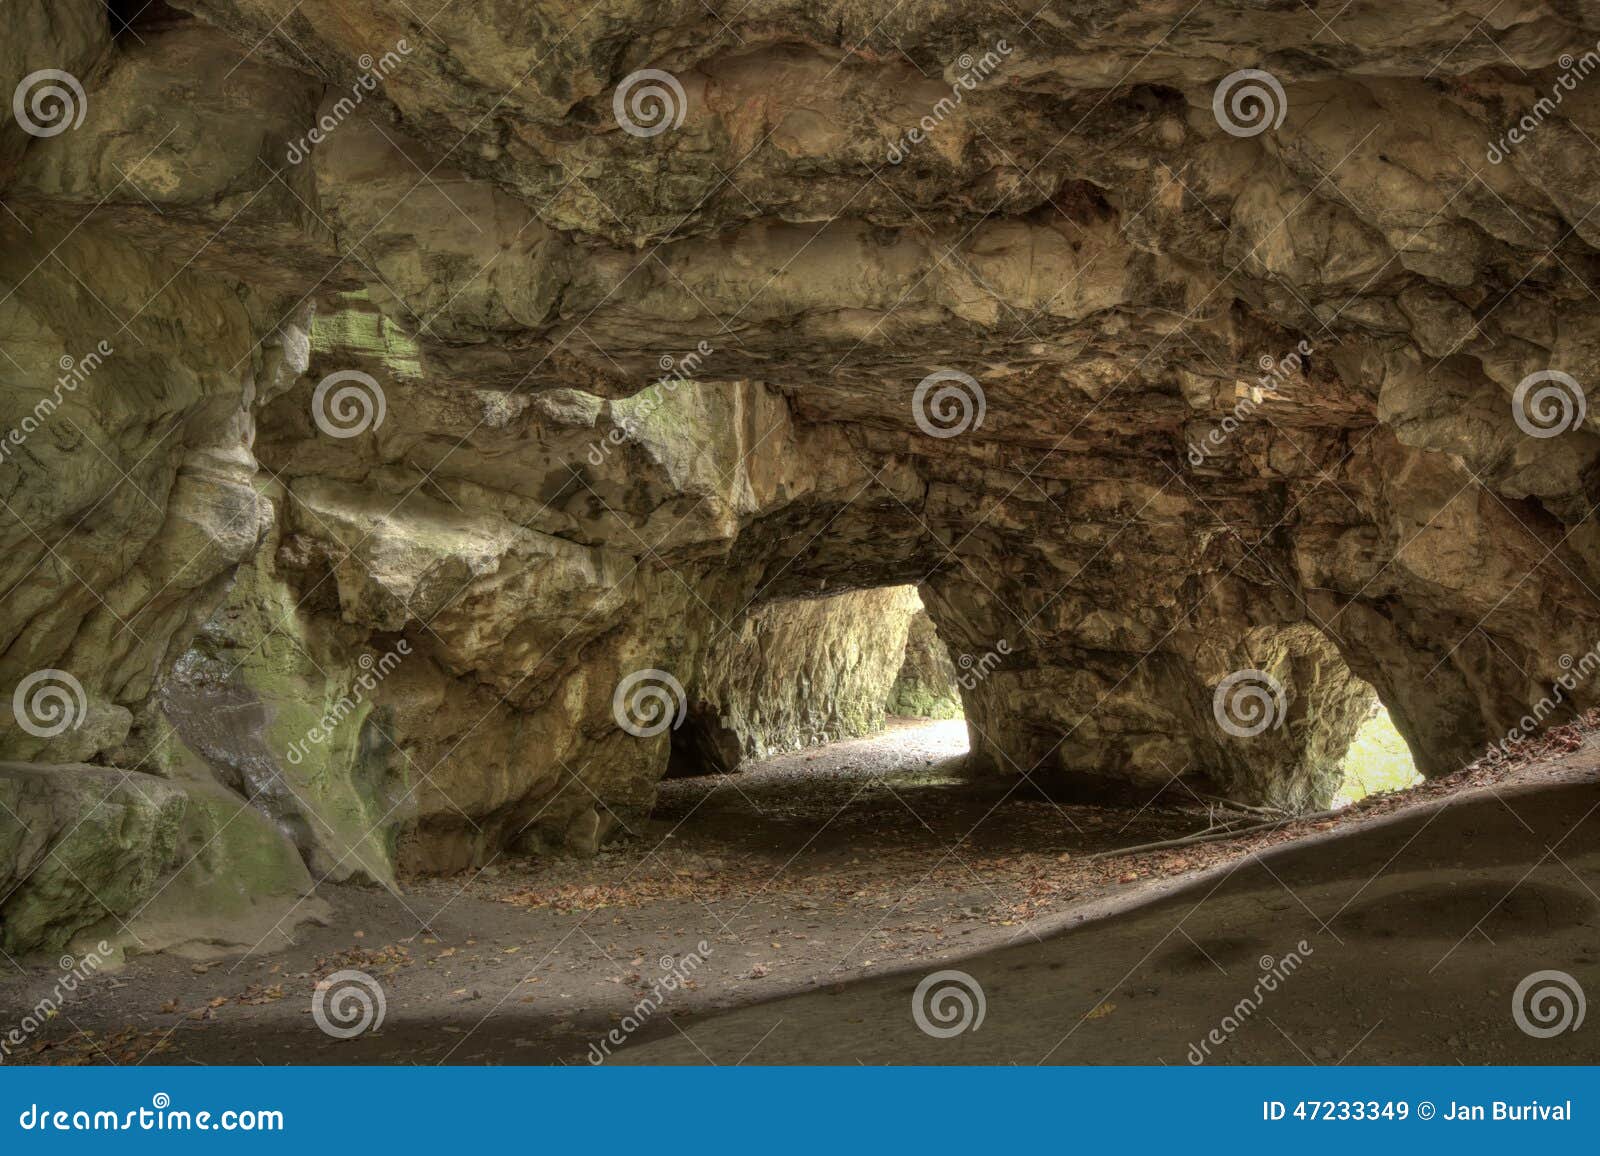 cave jachymka in moravian karst, czech republic